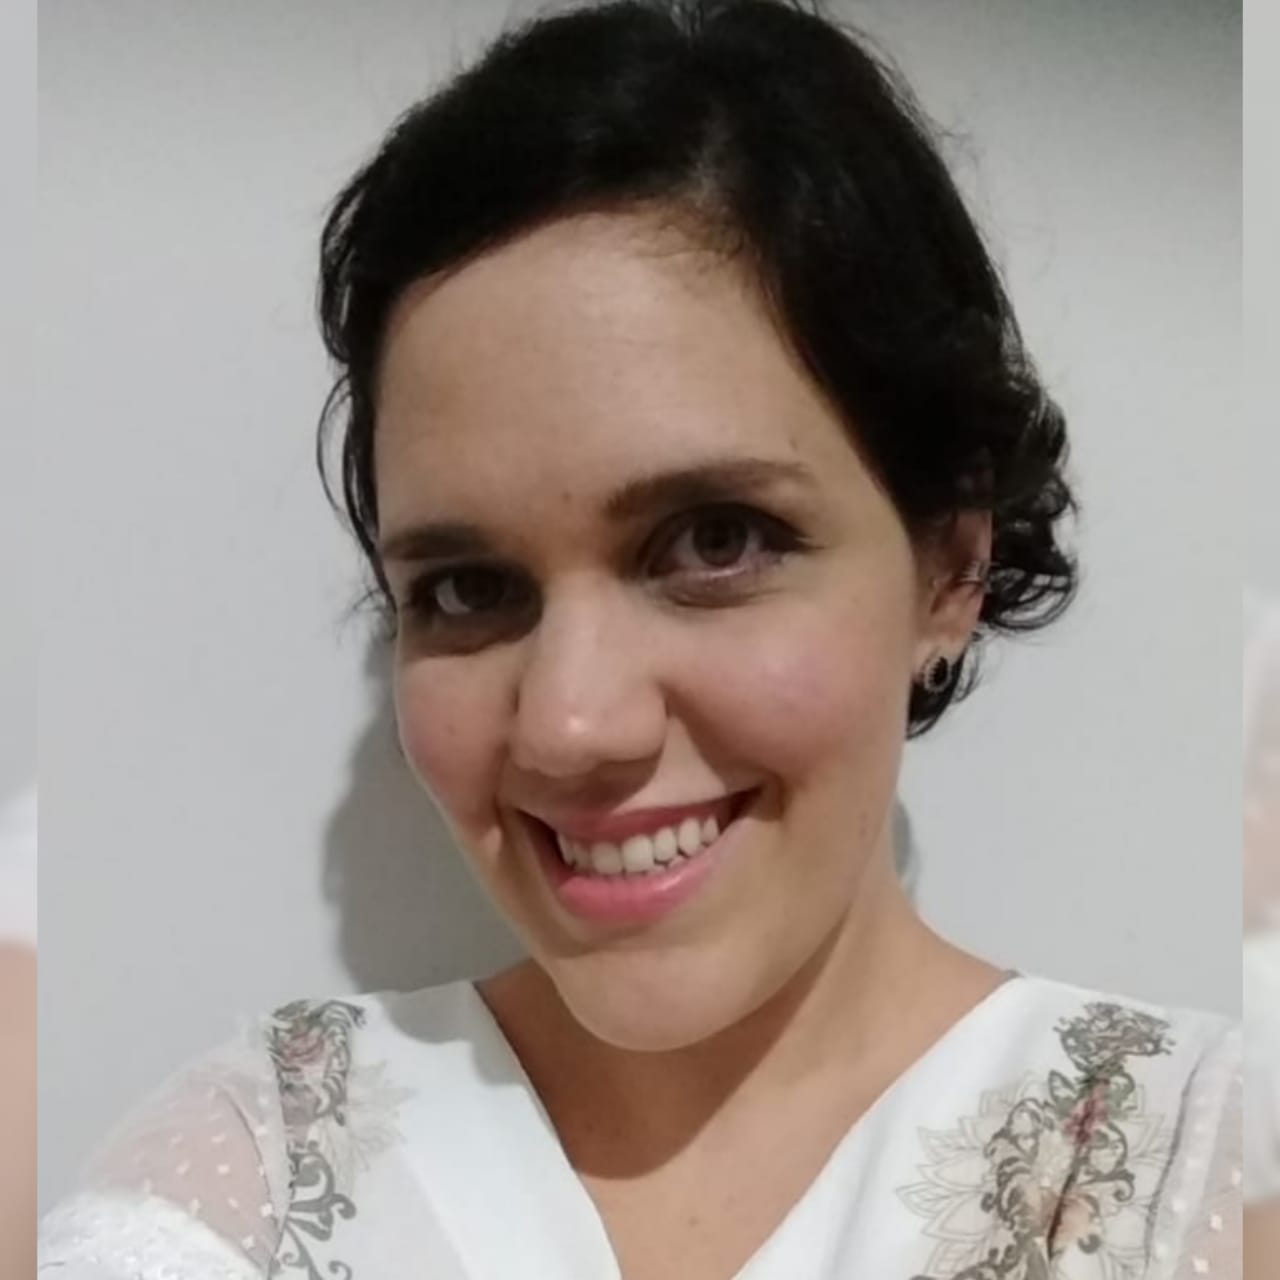 Paola Cristine Guimarães de Souza